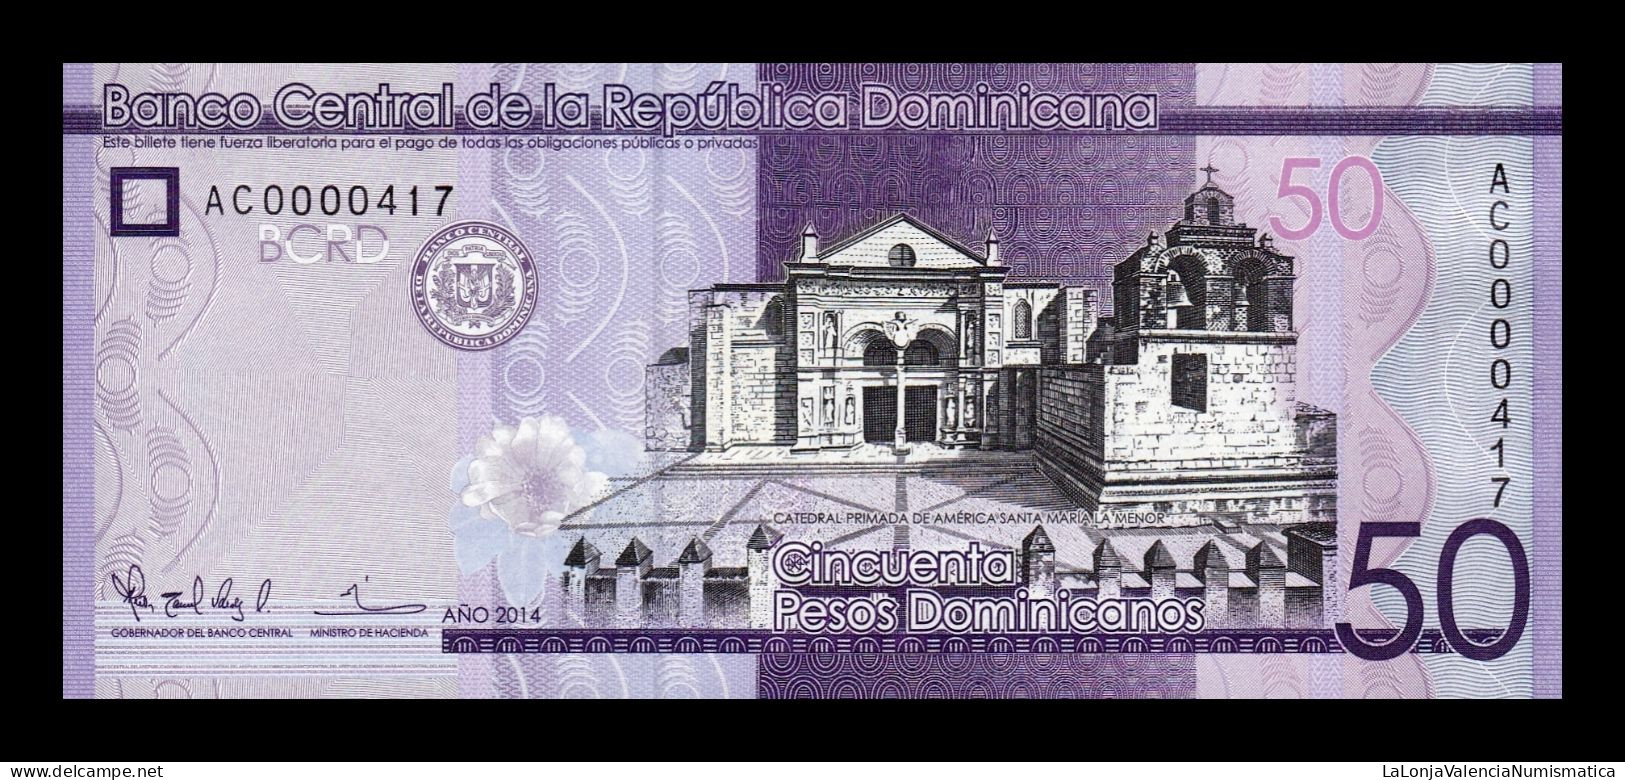 República Dominicana 50 Pesos Dominicanos 2014 Pick 189a Low Serial 417 Sc Unc - República Dominicana